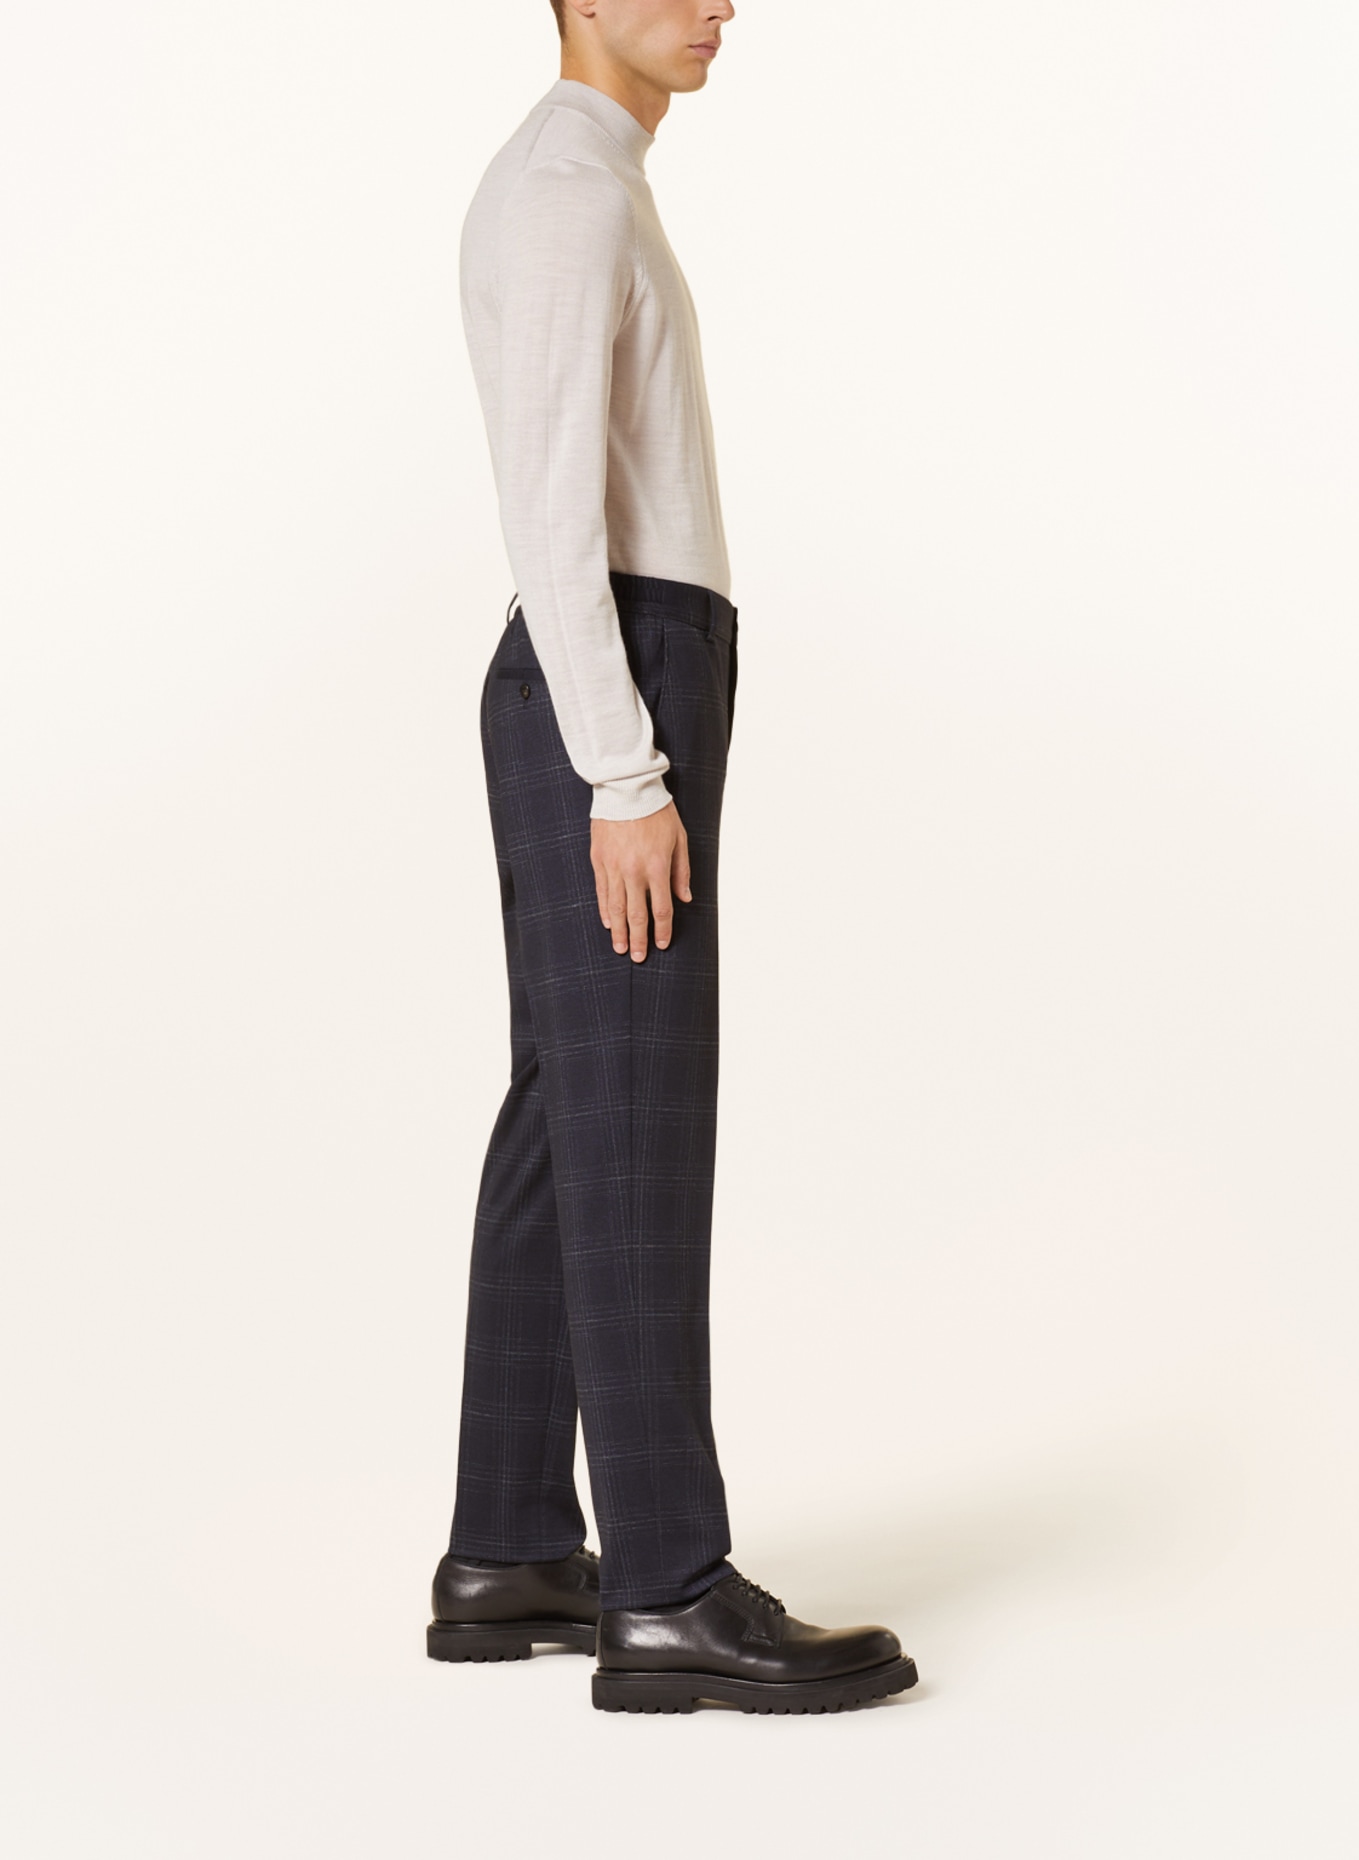 JOOP! Suit trousers BAXX slim fit in jersey, Color: 405 Dark Blue                  405 (Image 5)